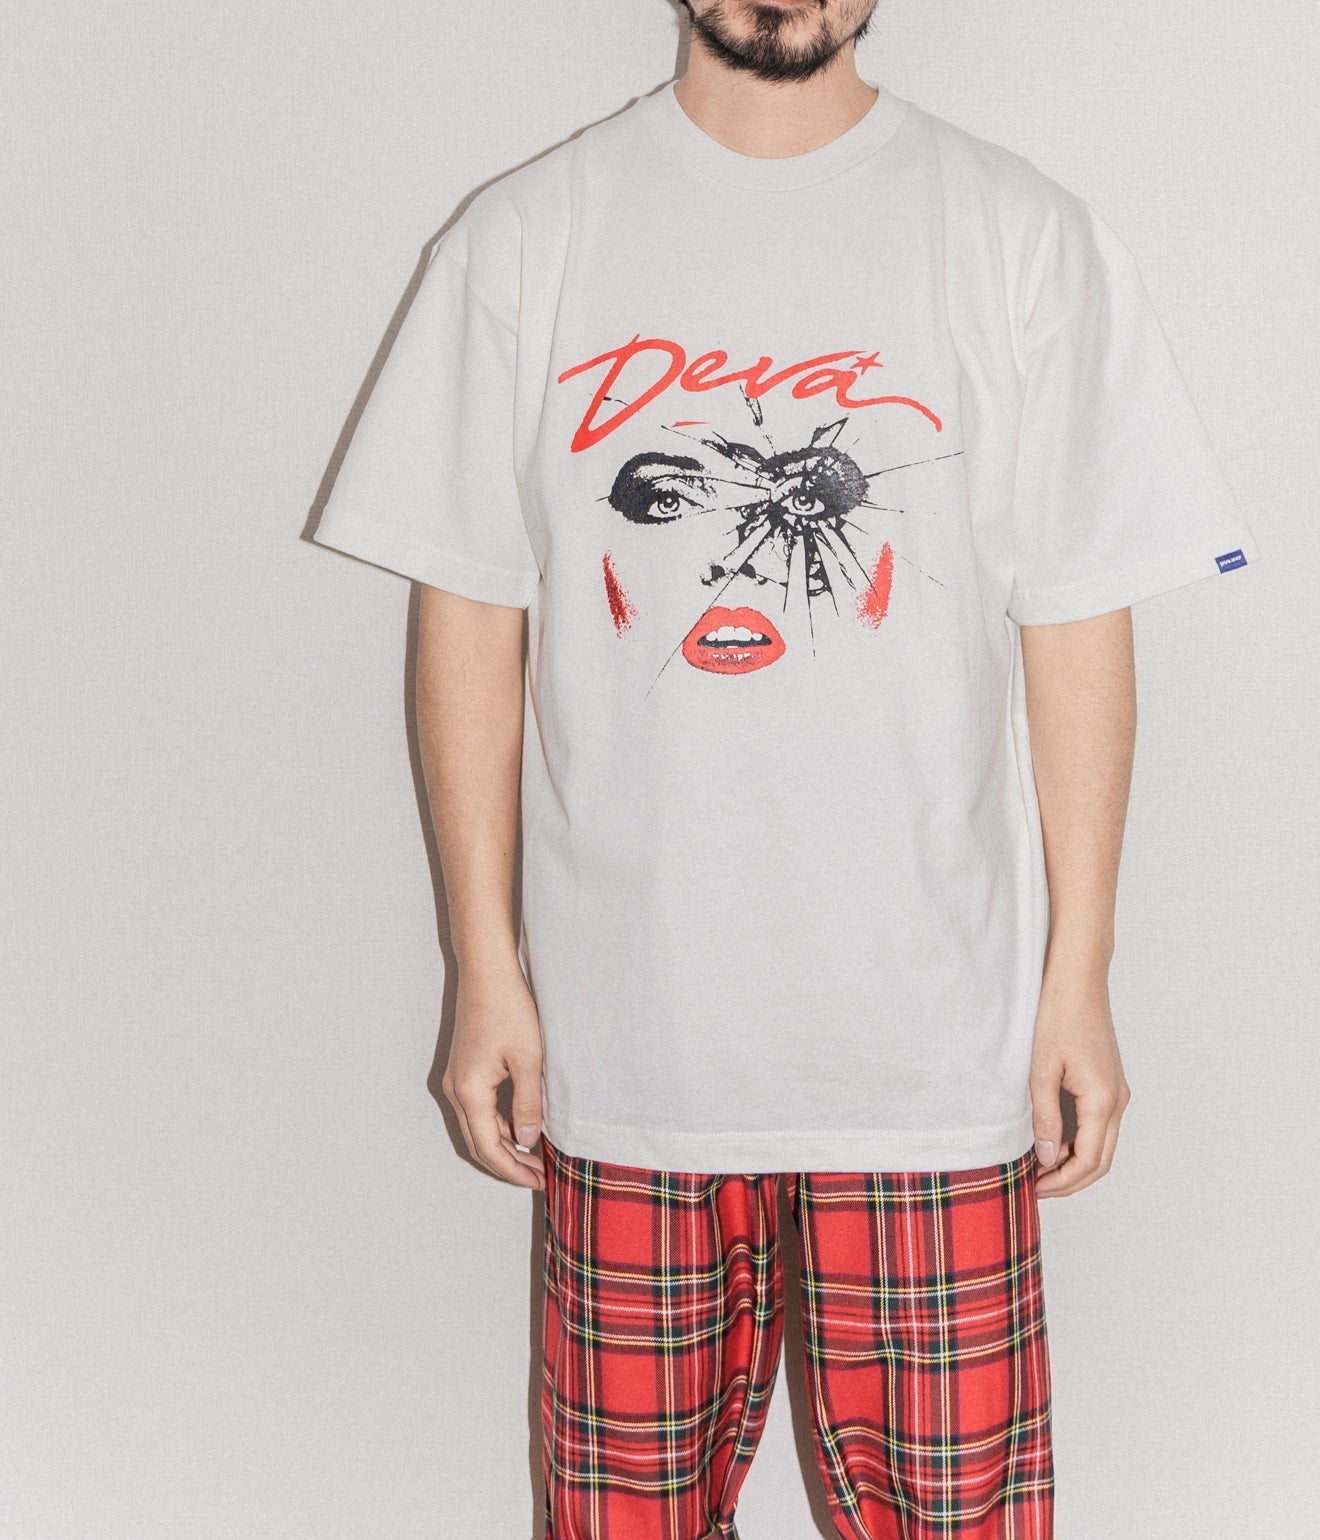 DEVÁ STATES "DREAMING T-Shirt" White - WEAREALLANIMALS